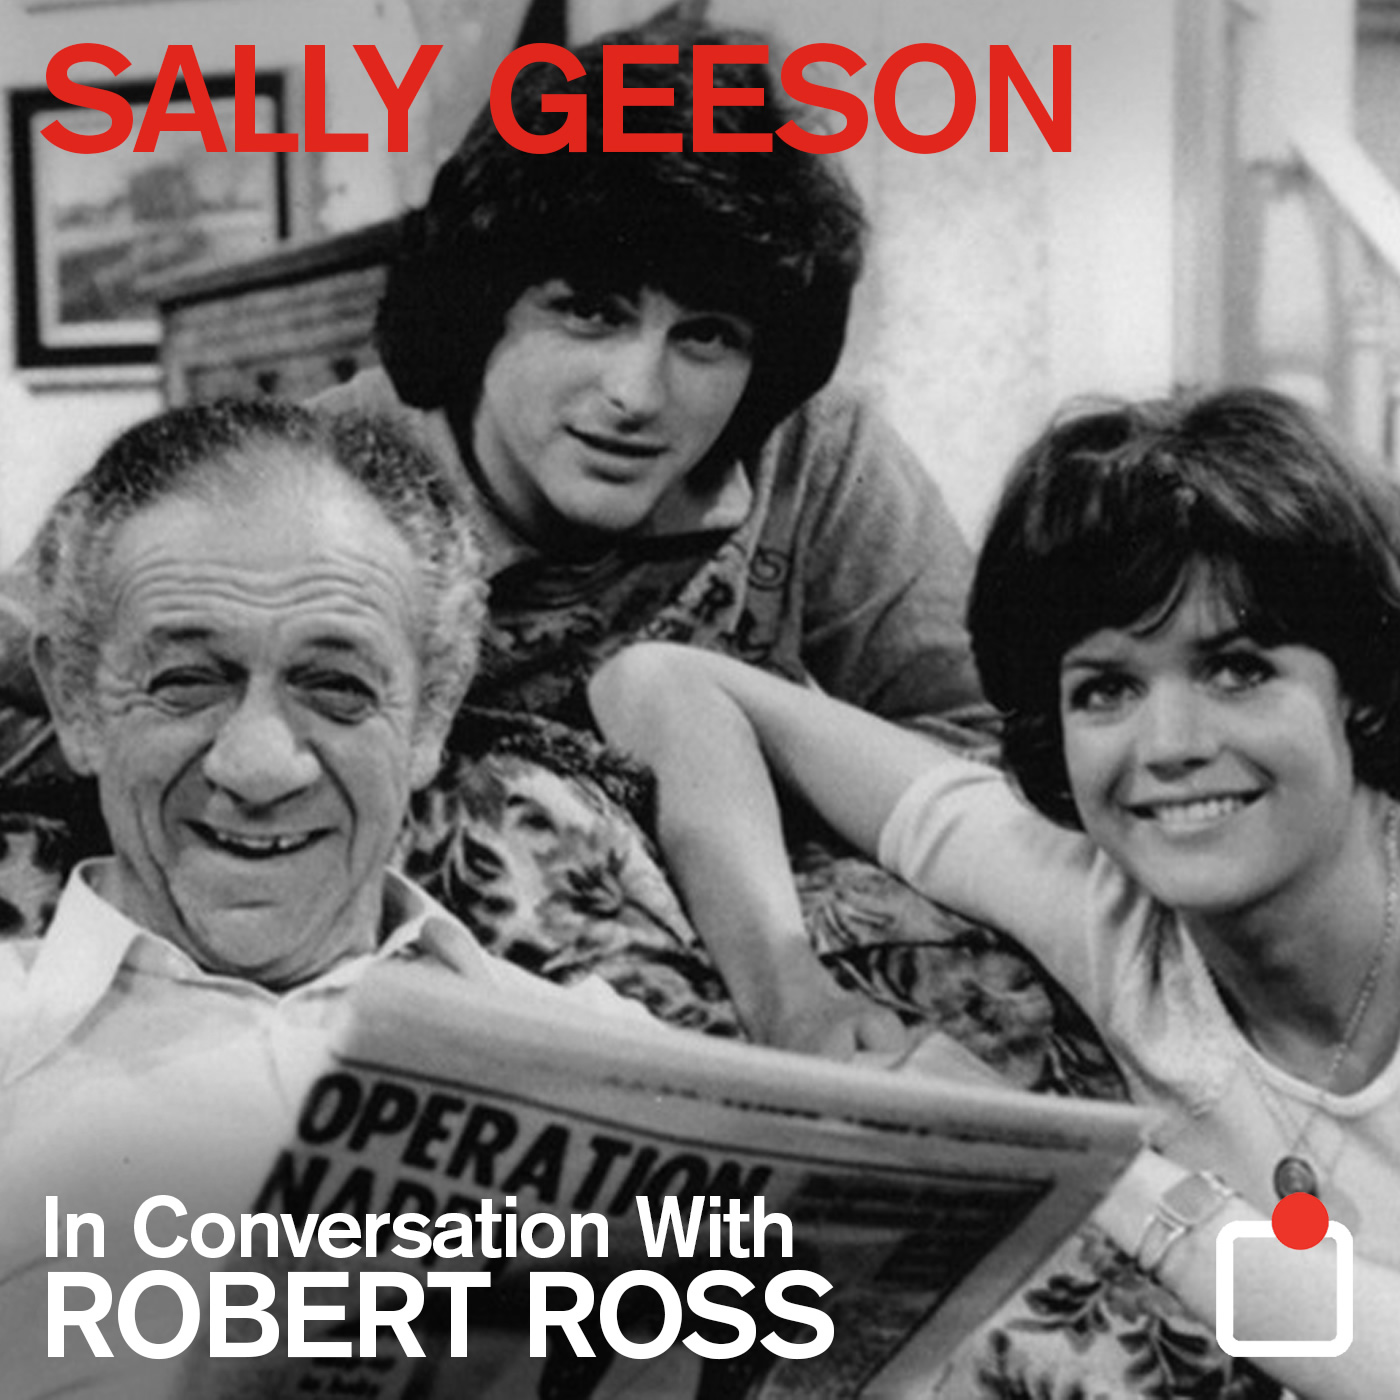 Series 1, Episode 4 - Sally Geeson